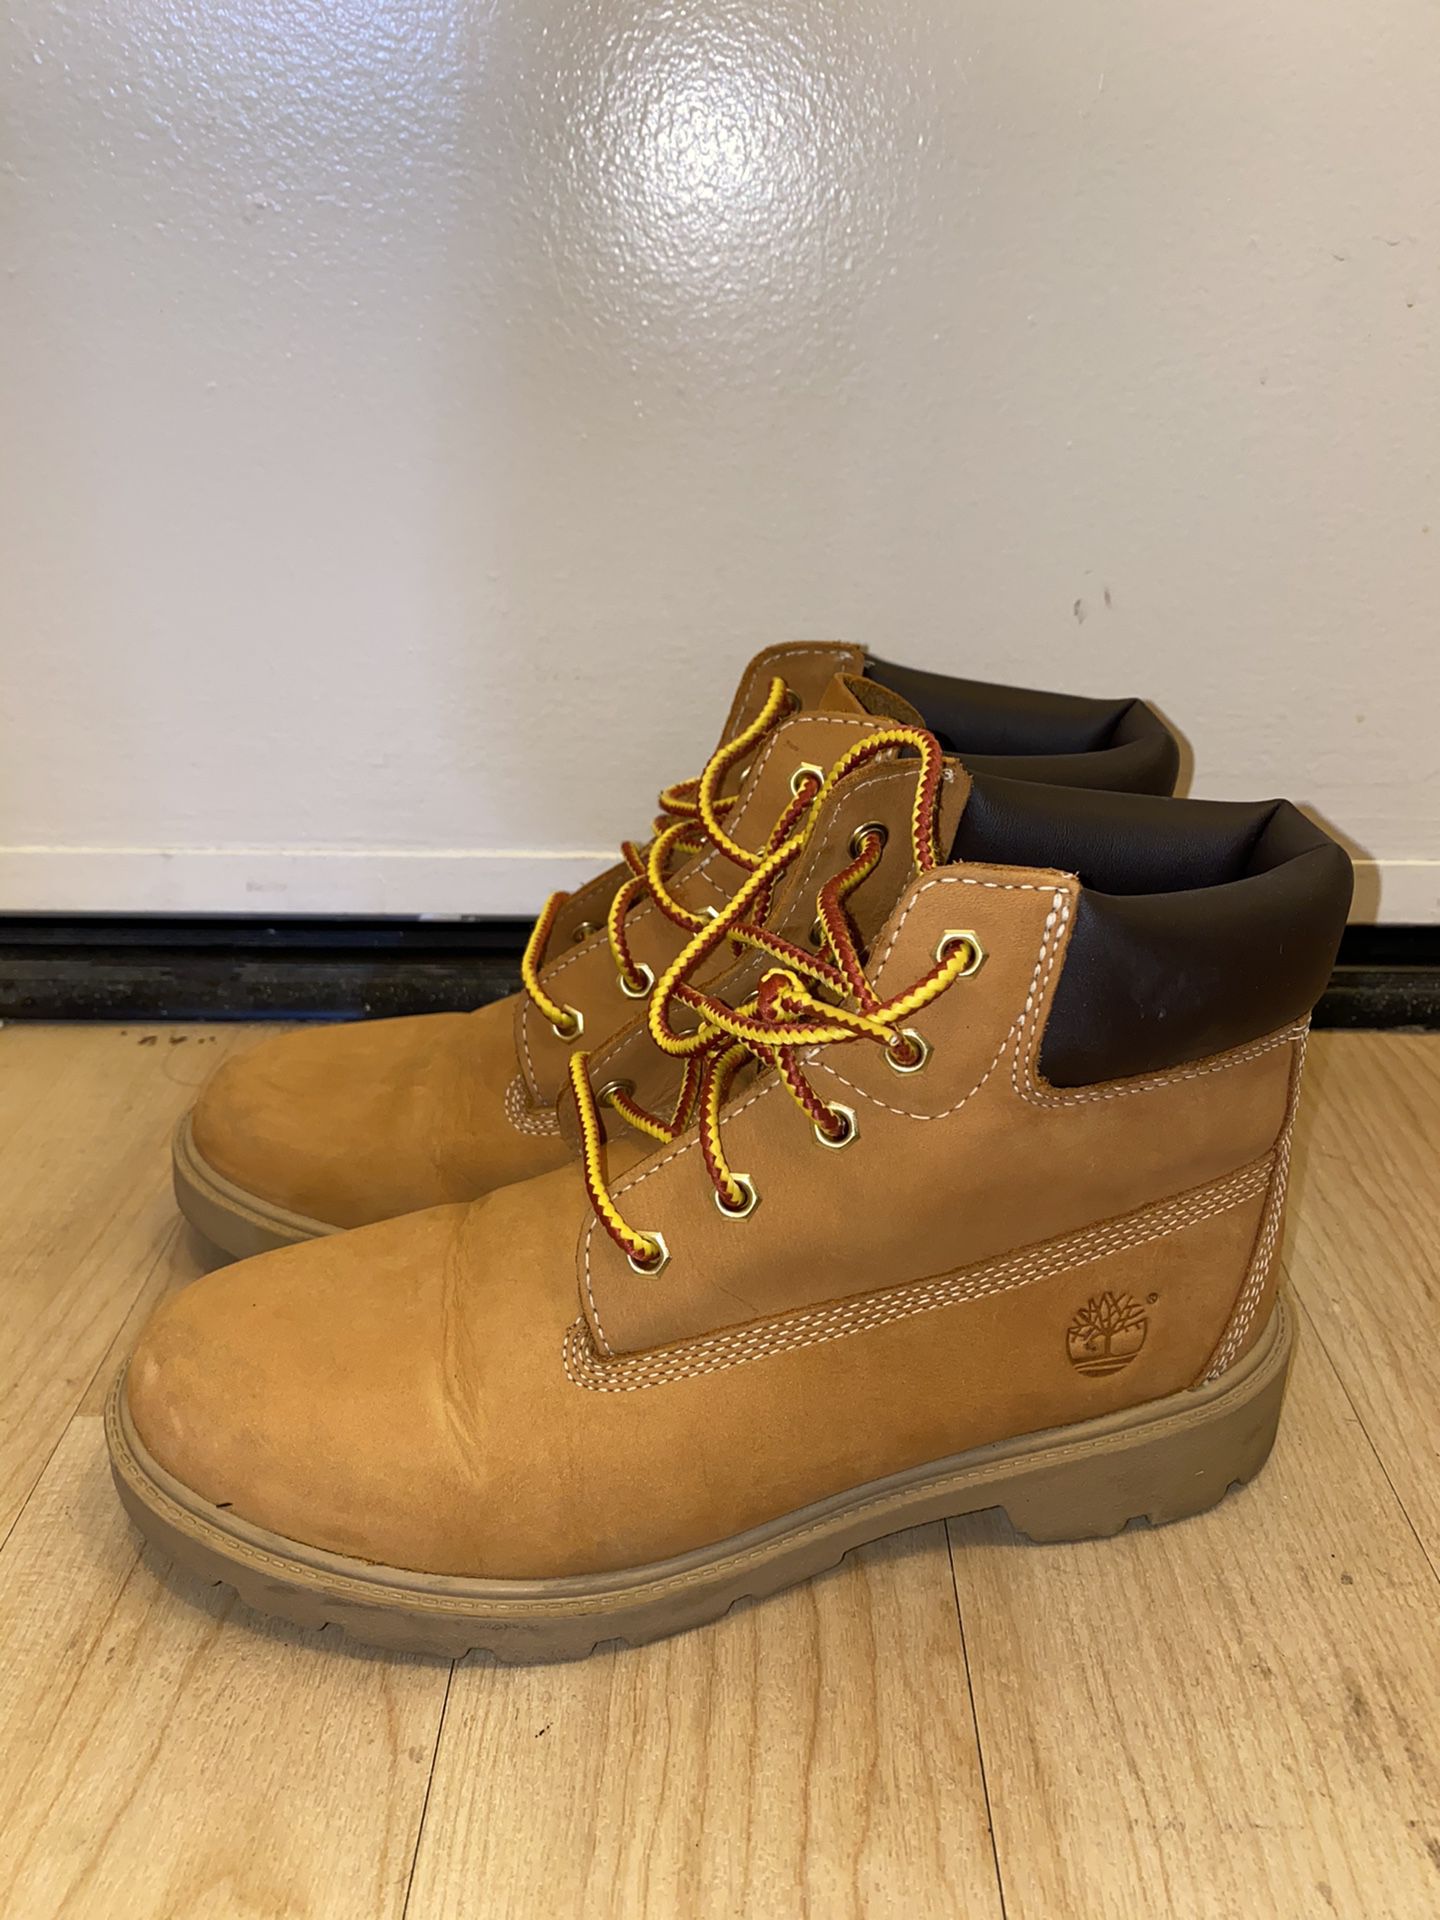 Timberland Boots (women’s 7)